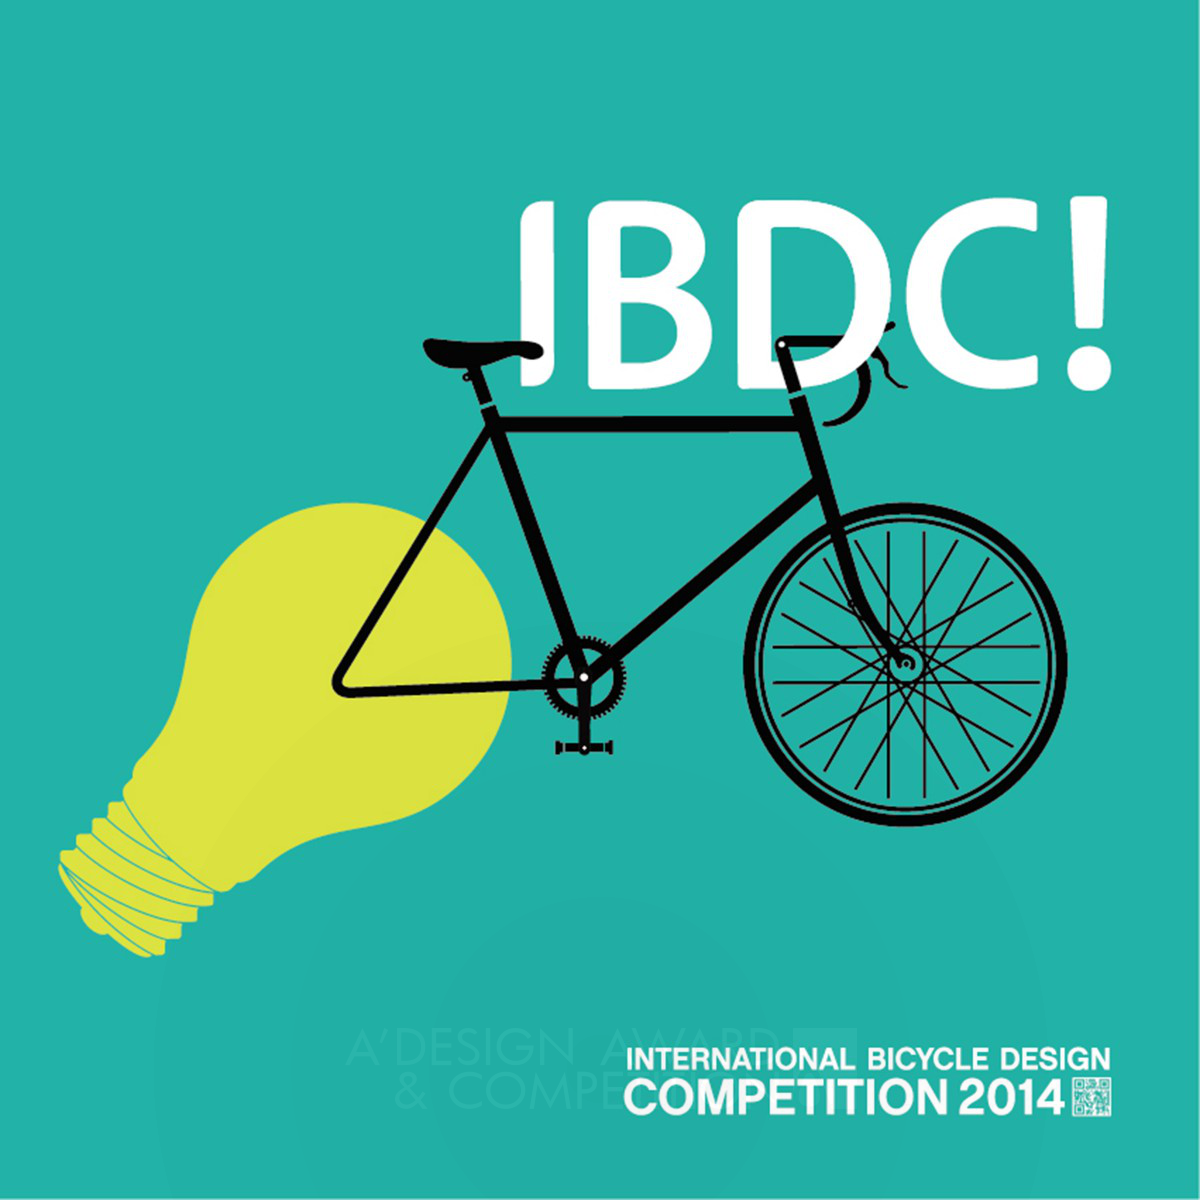 IBDC-2014 Promotional Images Visual Identity by U VISUAL COMMUNICATION